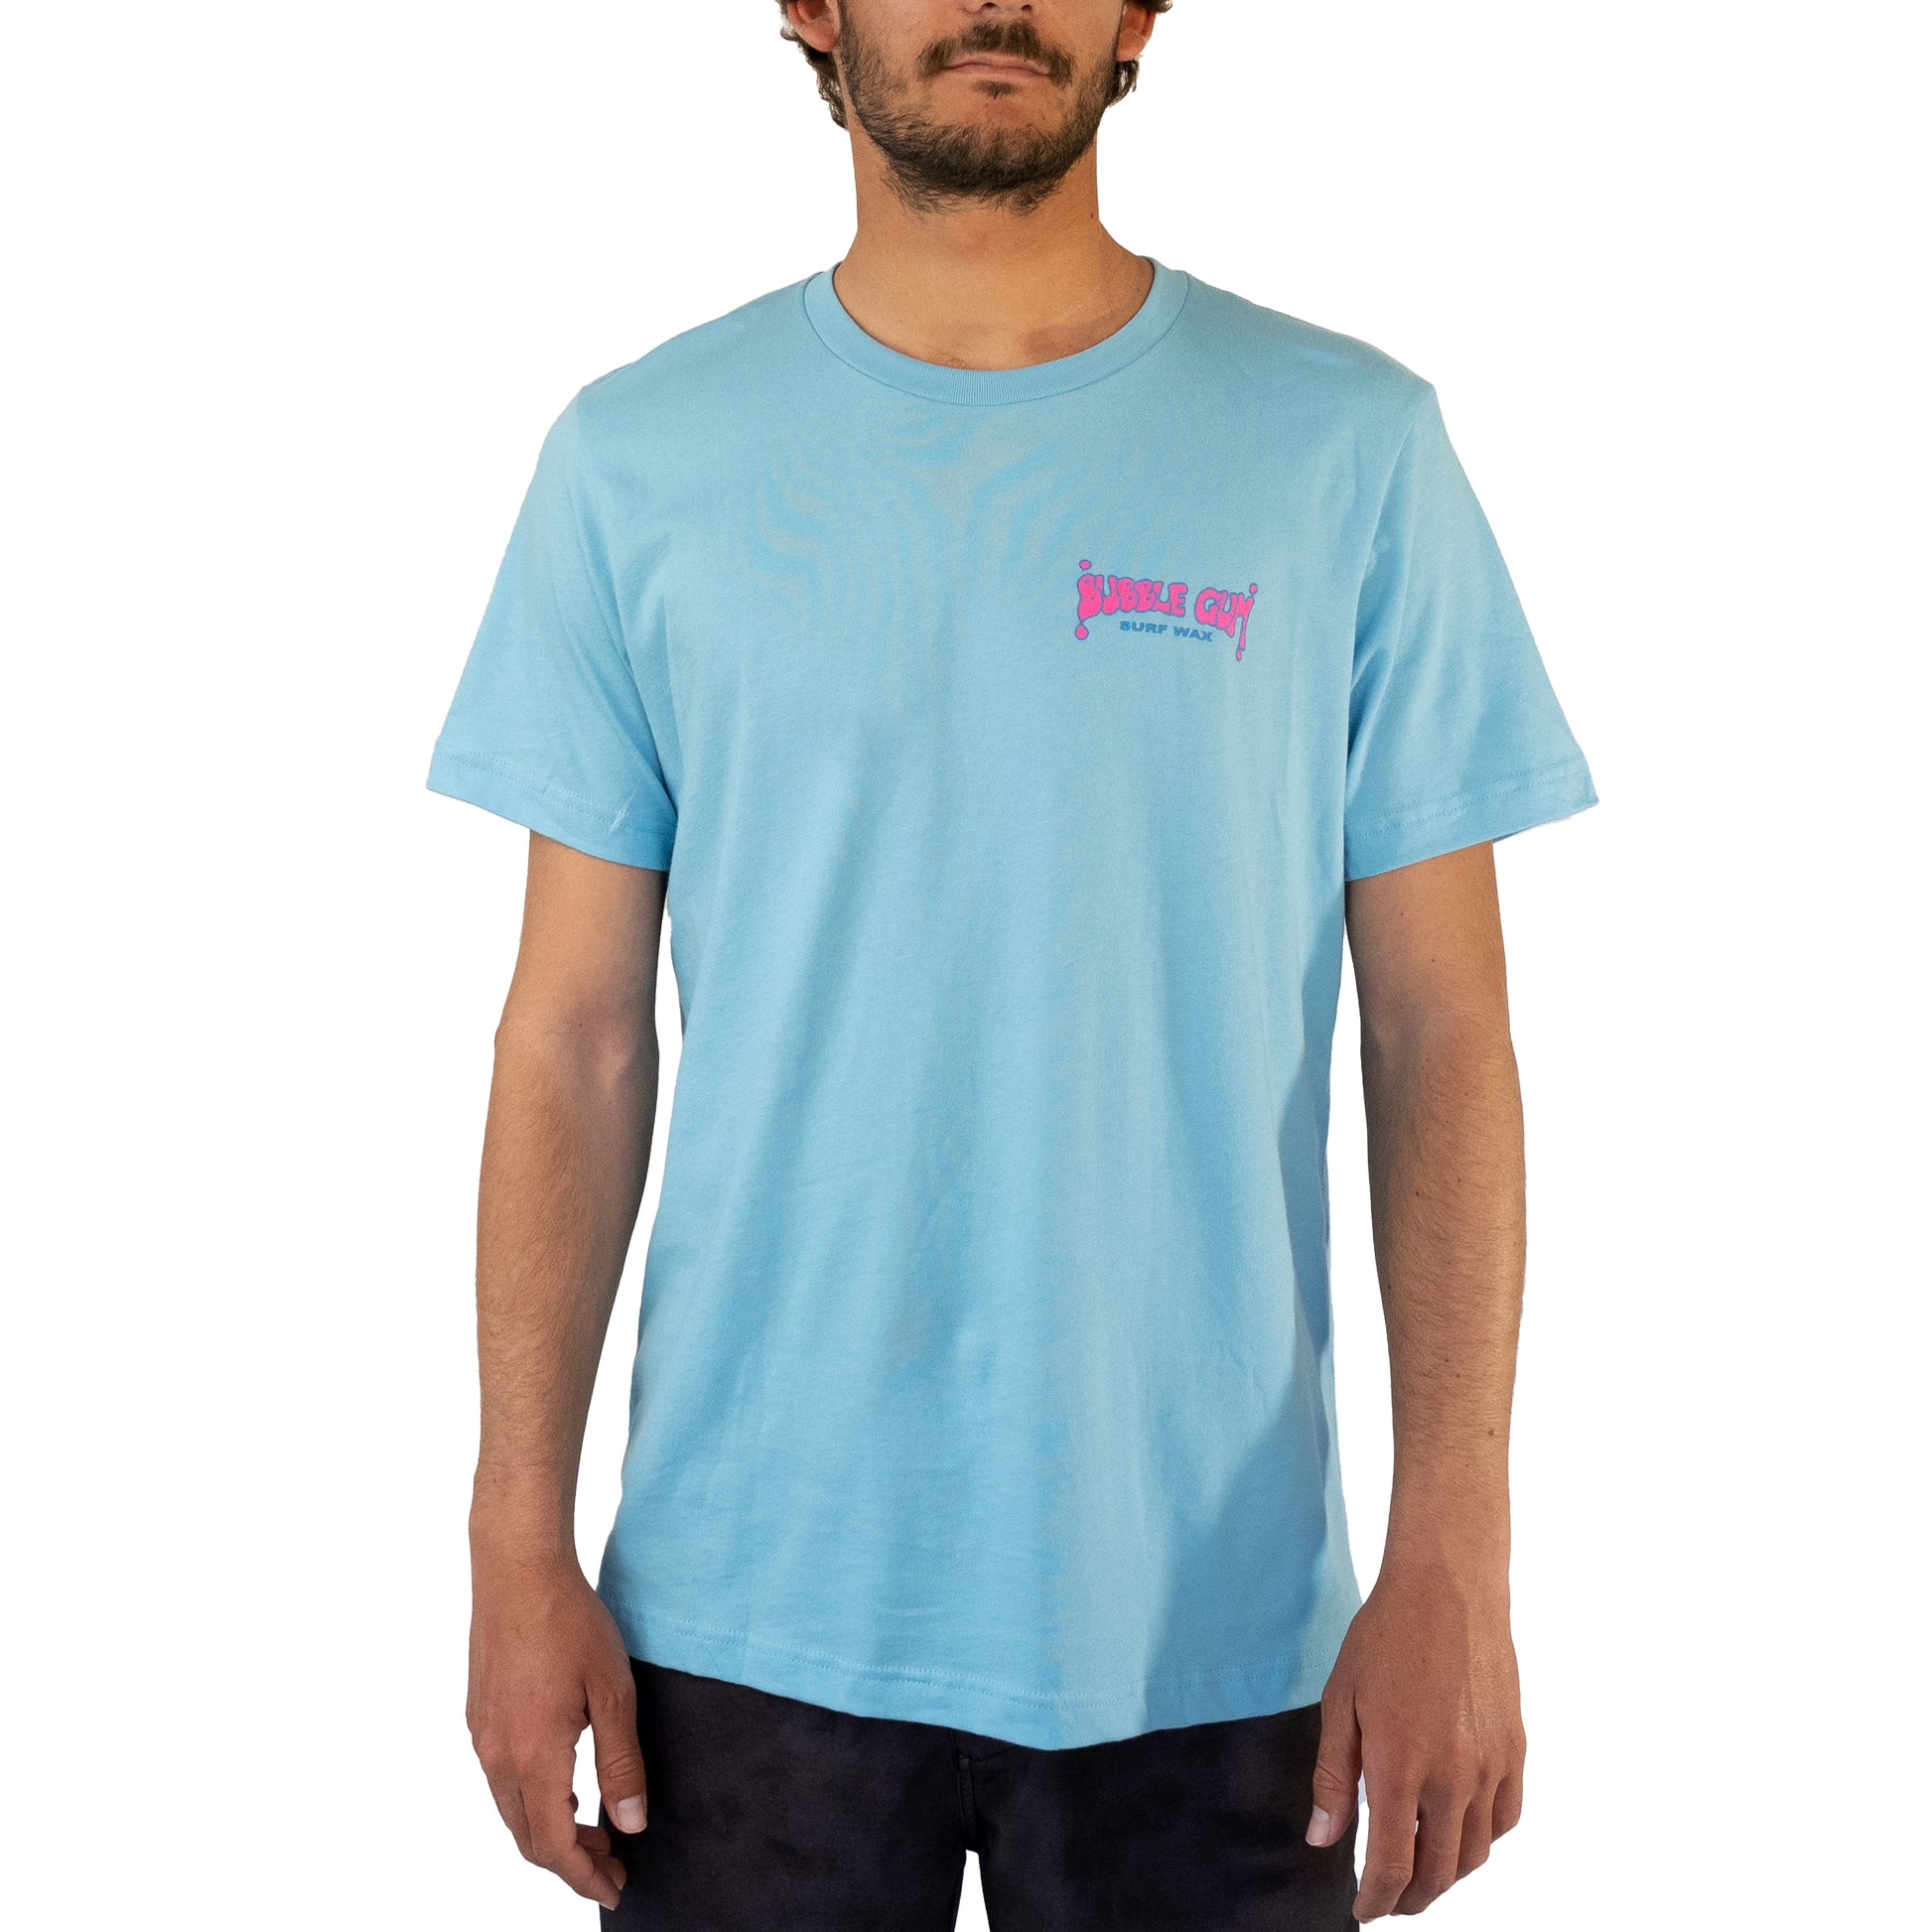 Bubble Gum Surf Wax Throwback Logo T-shirt on Blue Blank